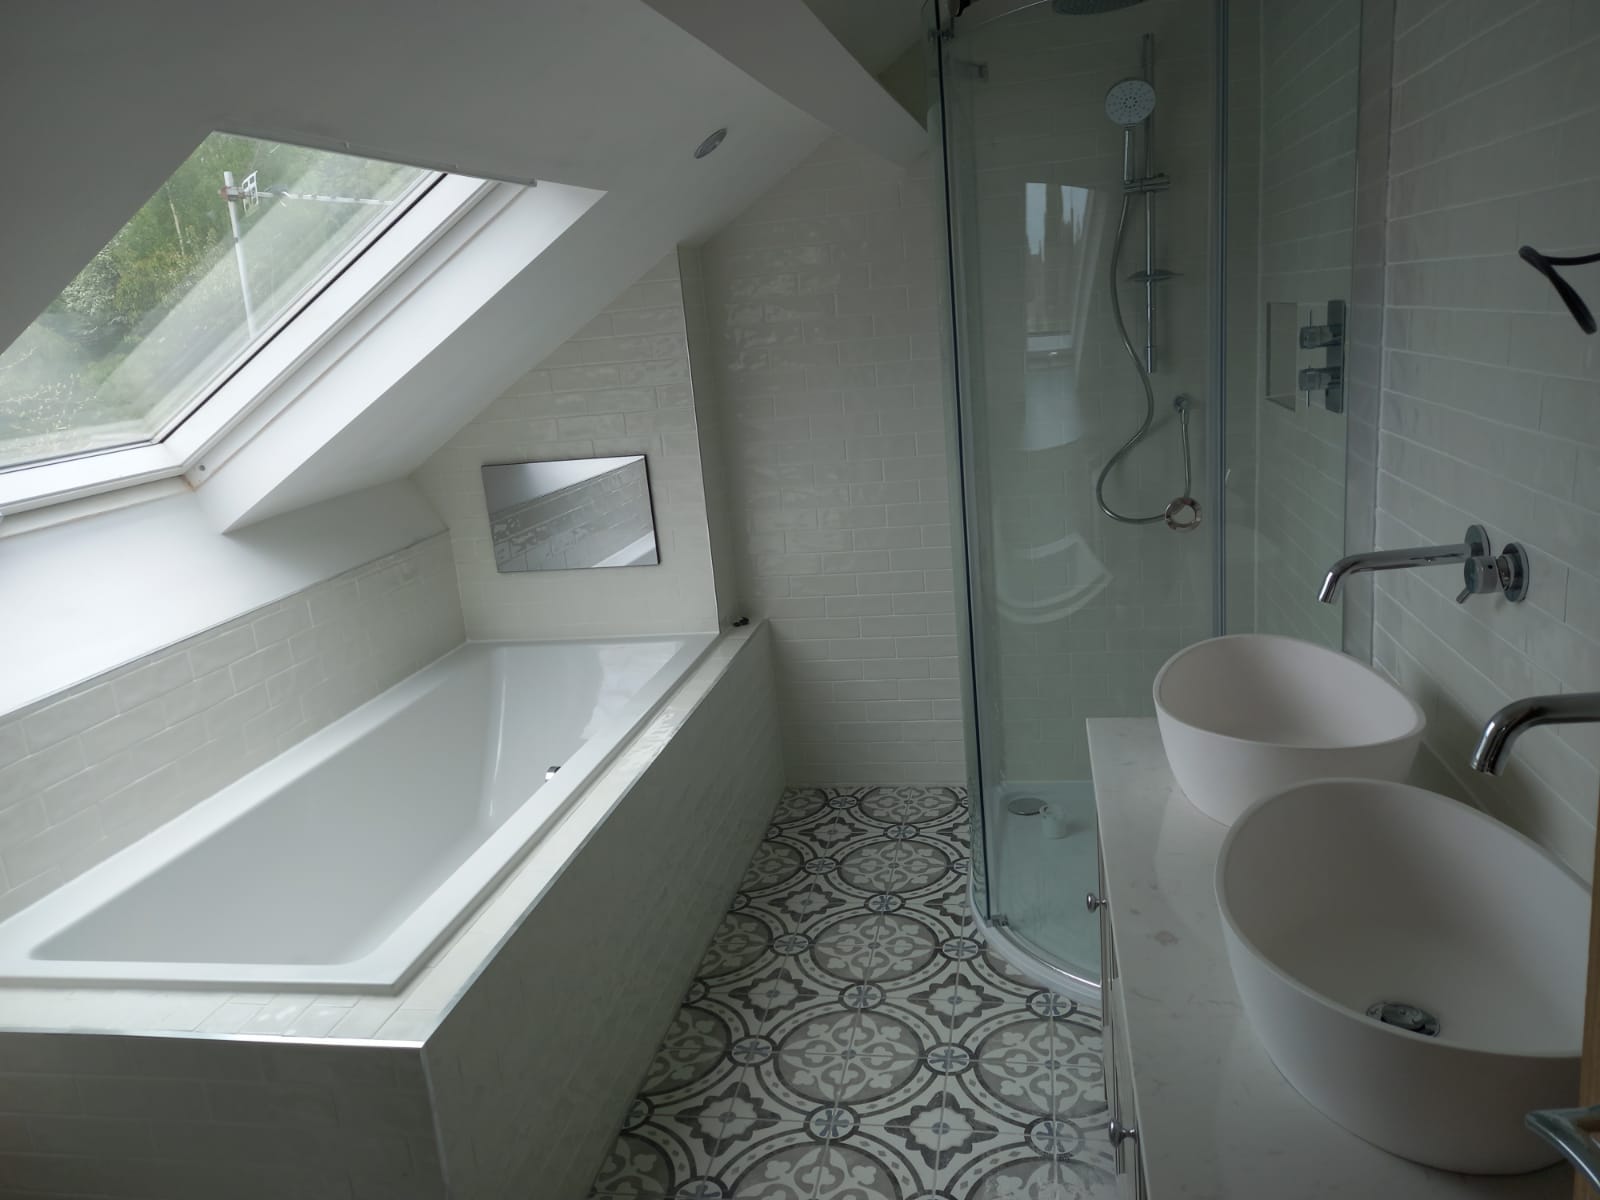 A loft conversion bathroom installation built by topflite loft conversions in northwest england